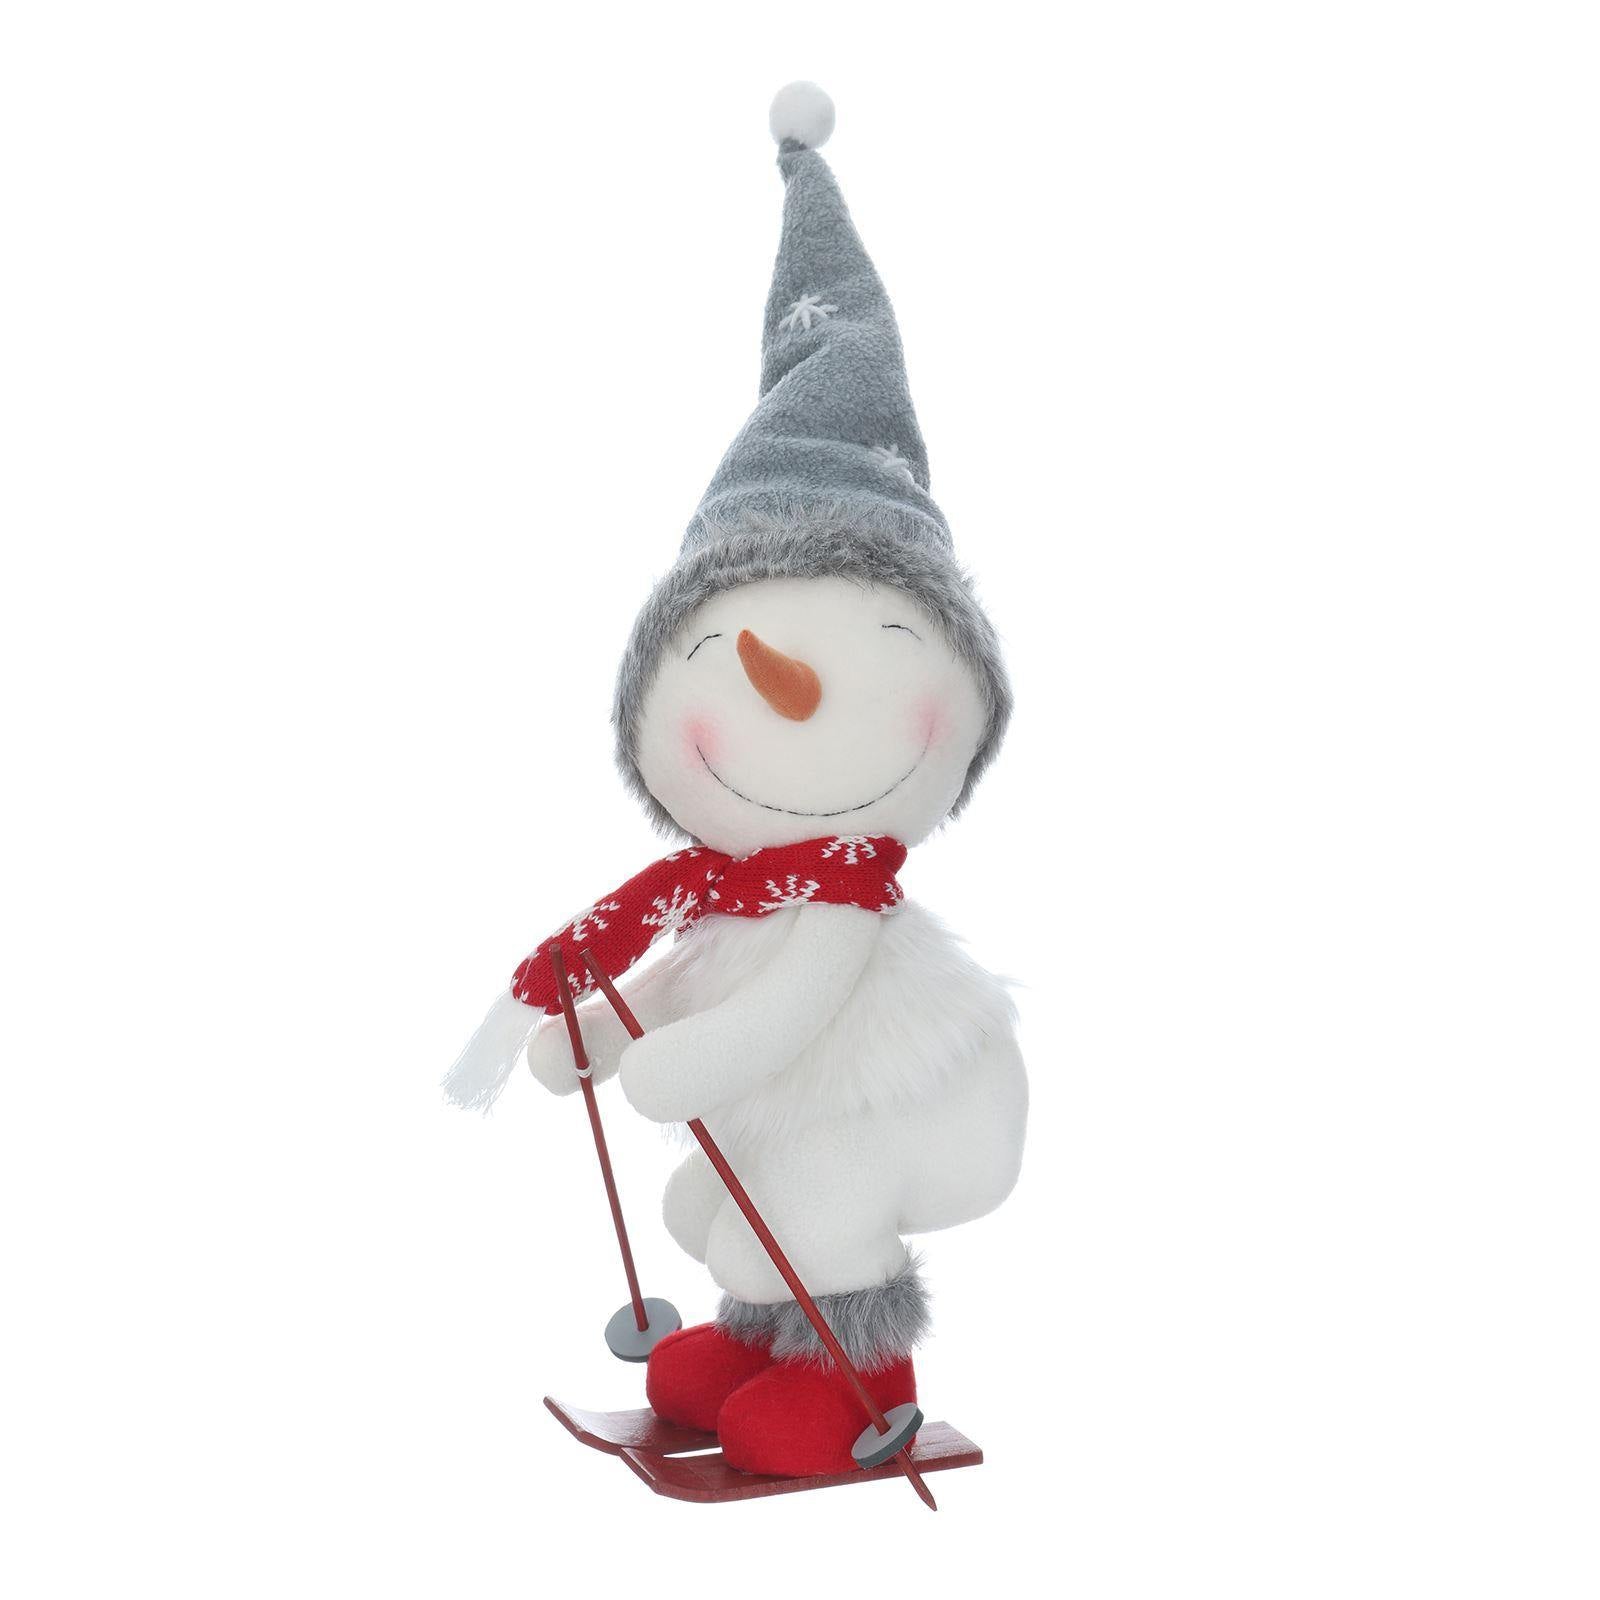 Mr Crimbo 16" Skiing Snowman Plush Christmas Decoration - MrCrimbo.co.uk -XS5734 - -christmas decorations